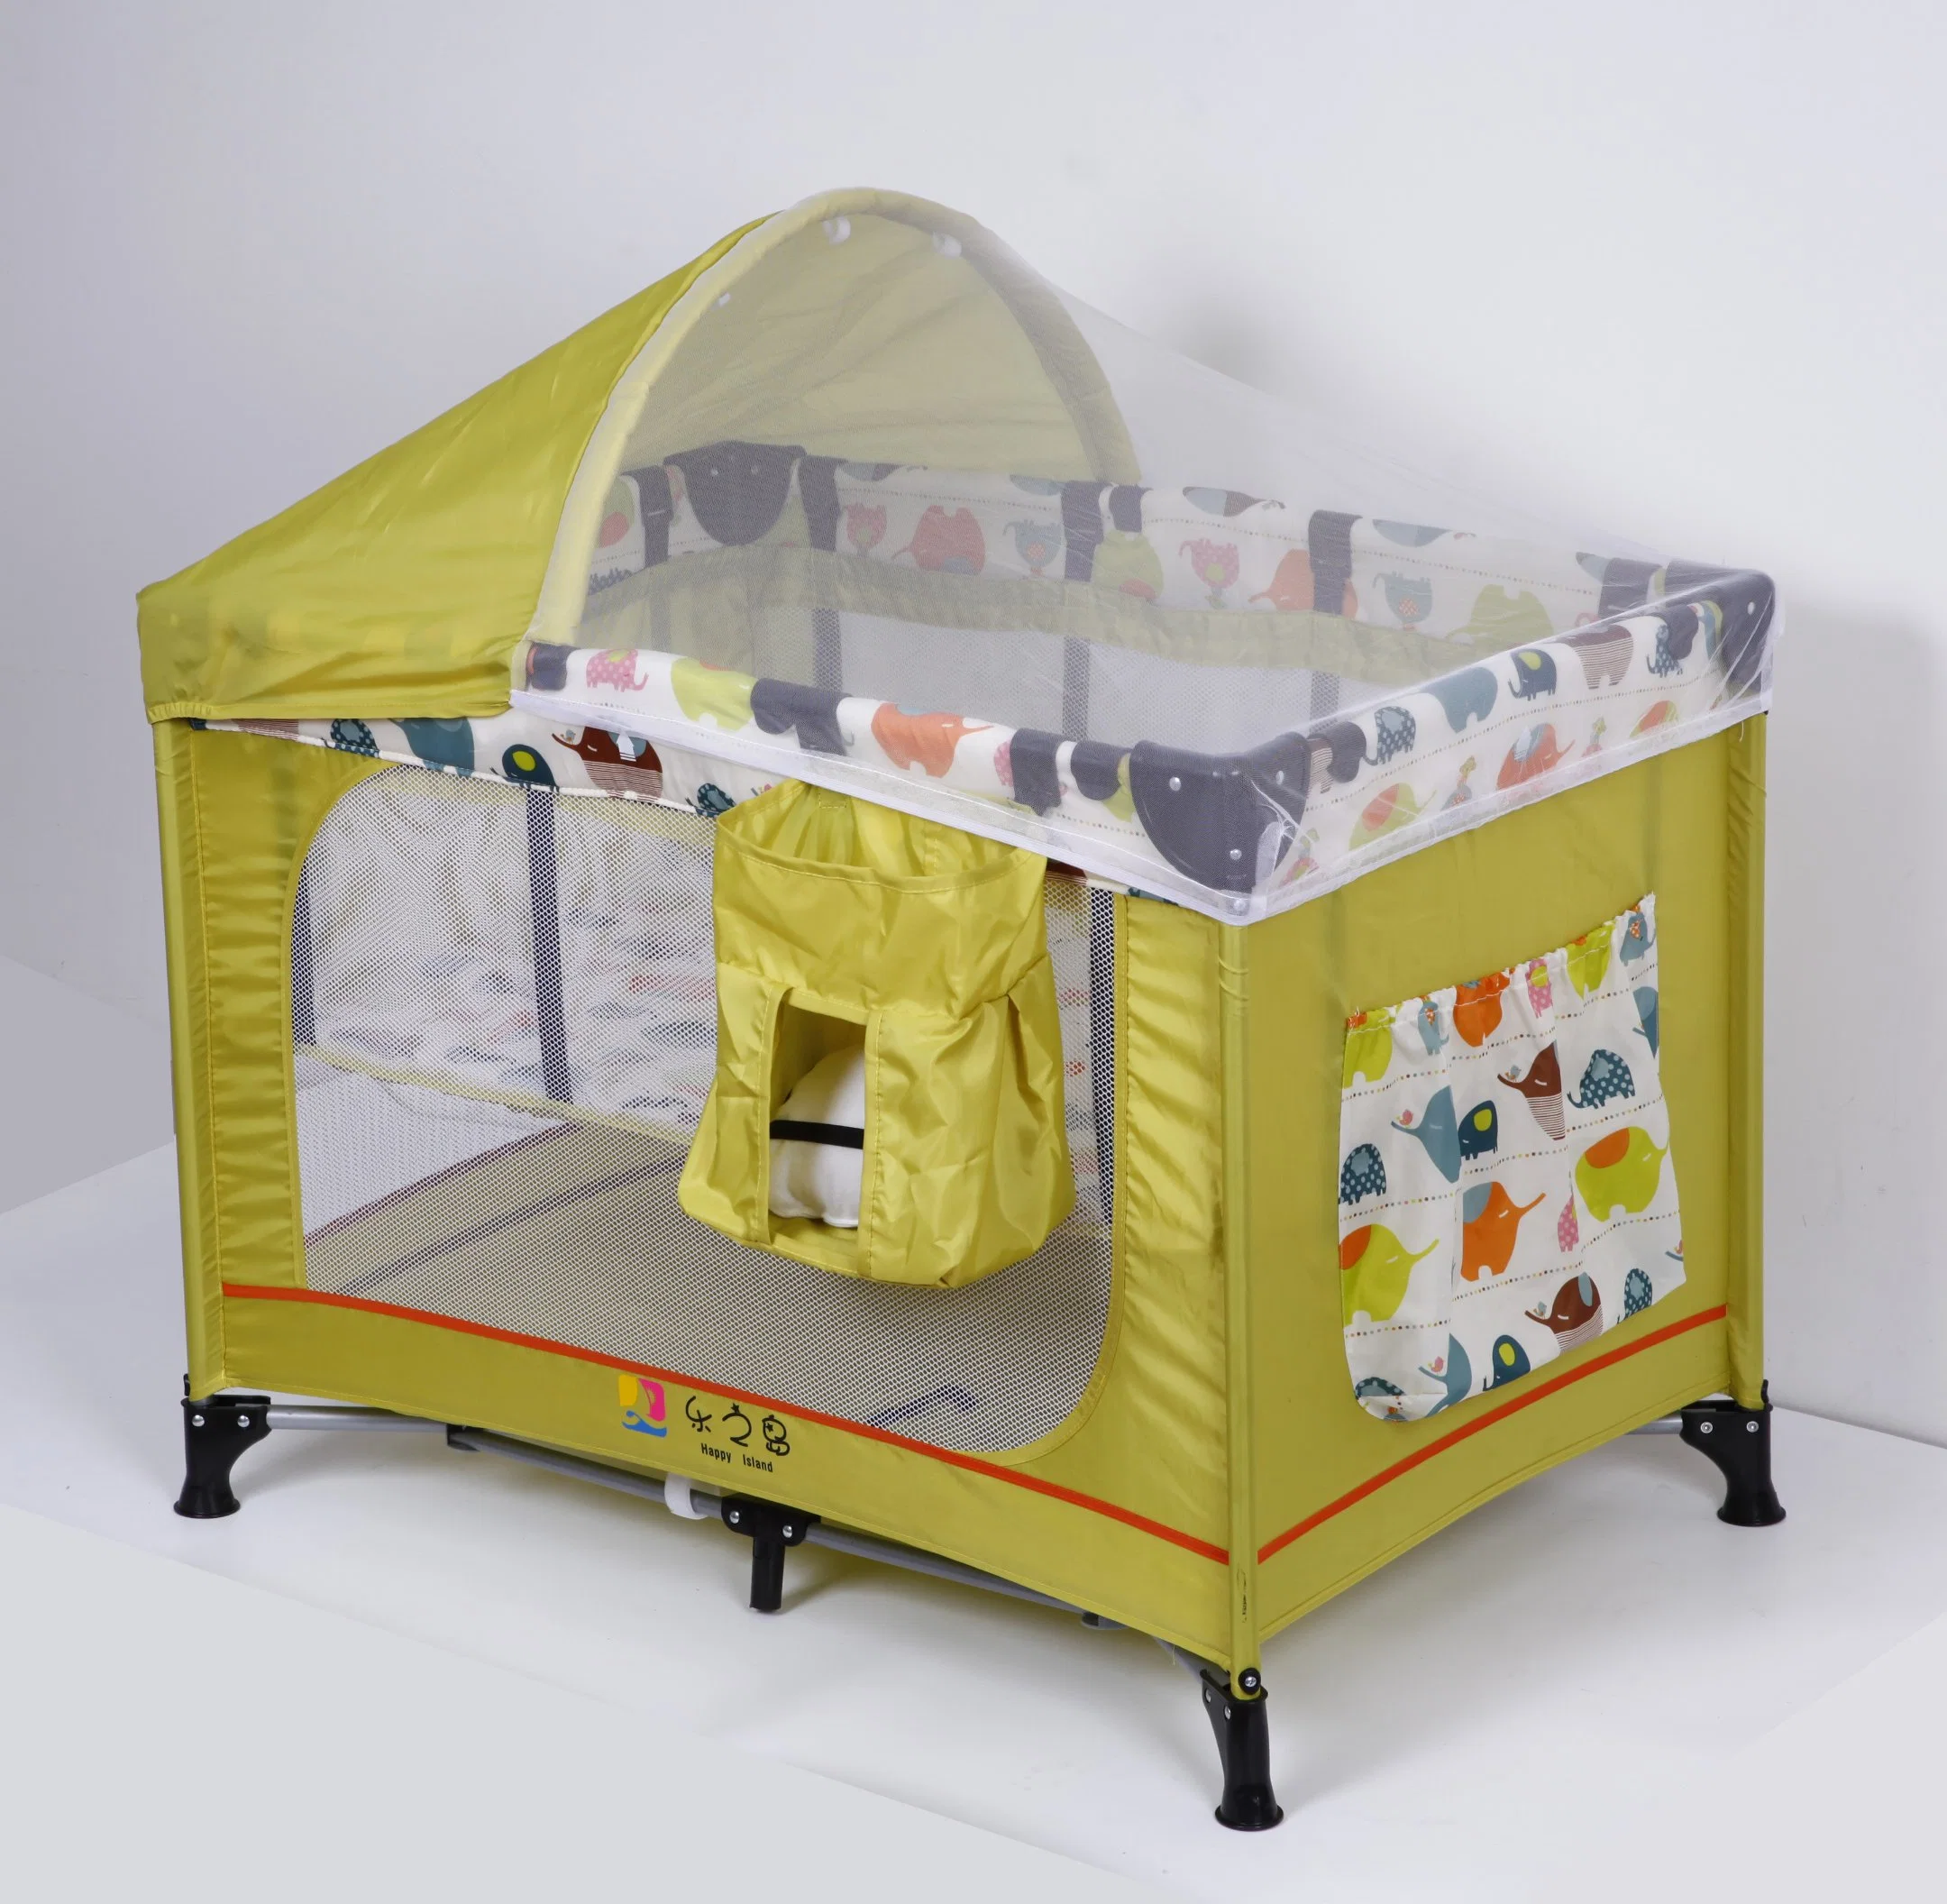 Pocket Cribs for European Standard